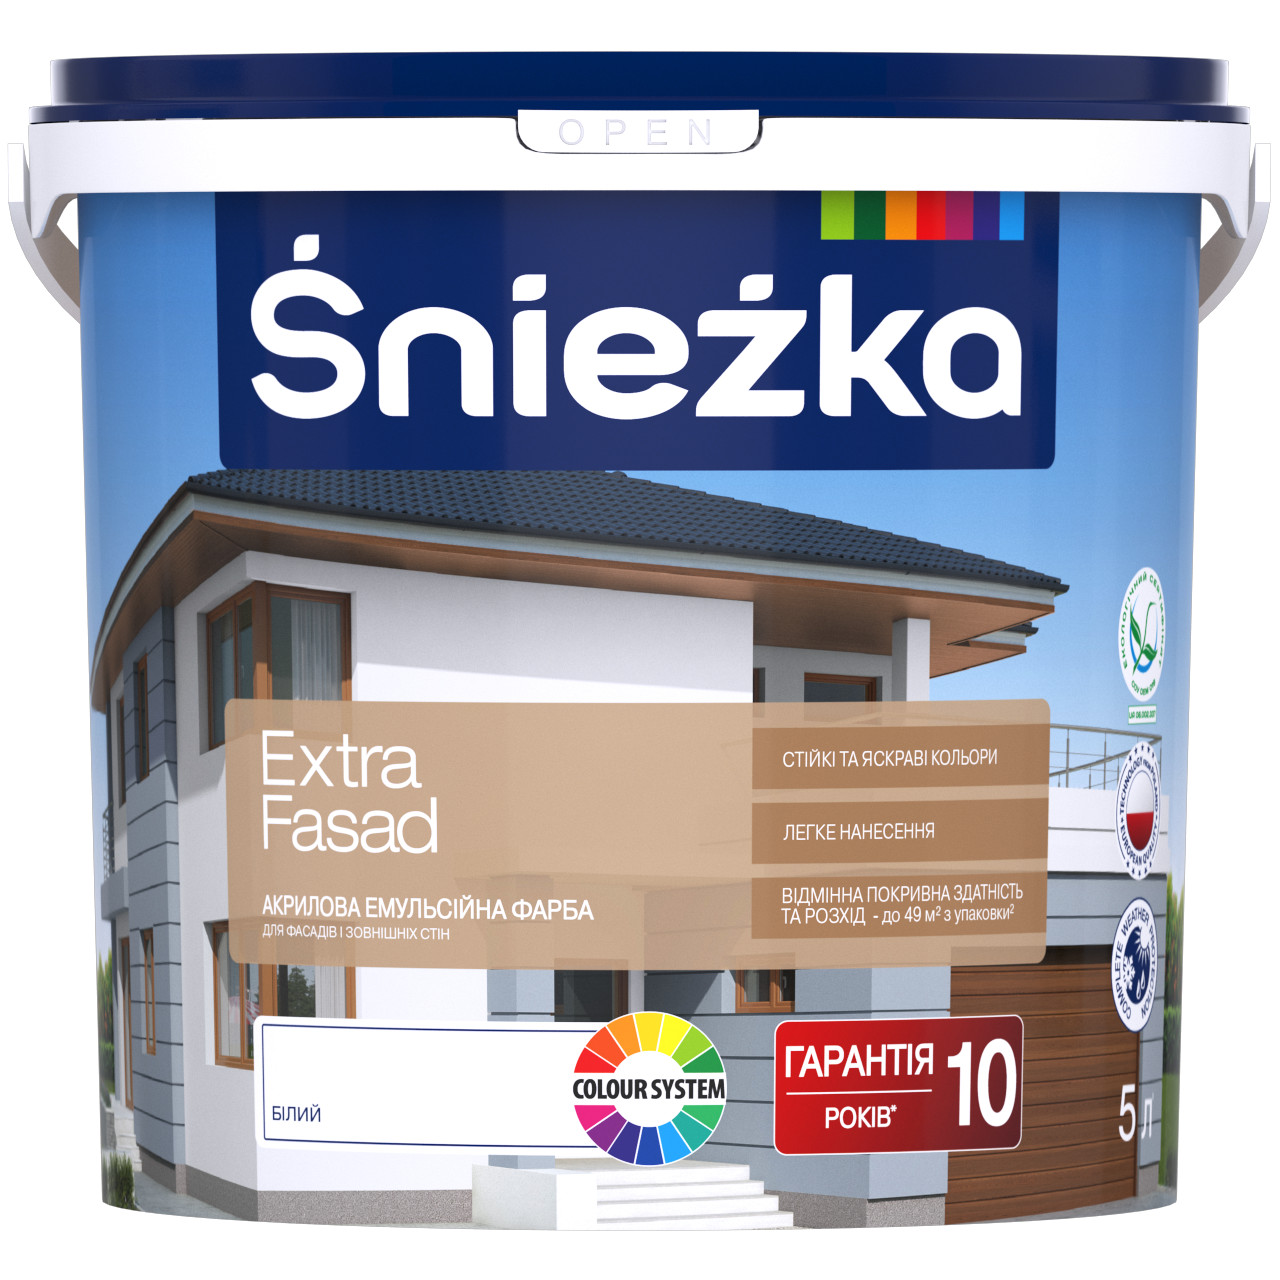 Sniezka Extra fasad 5л - зображення 1